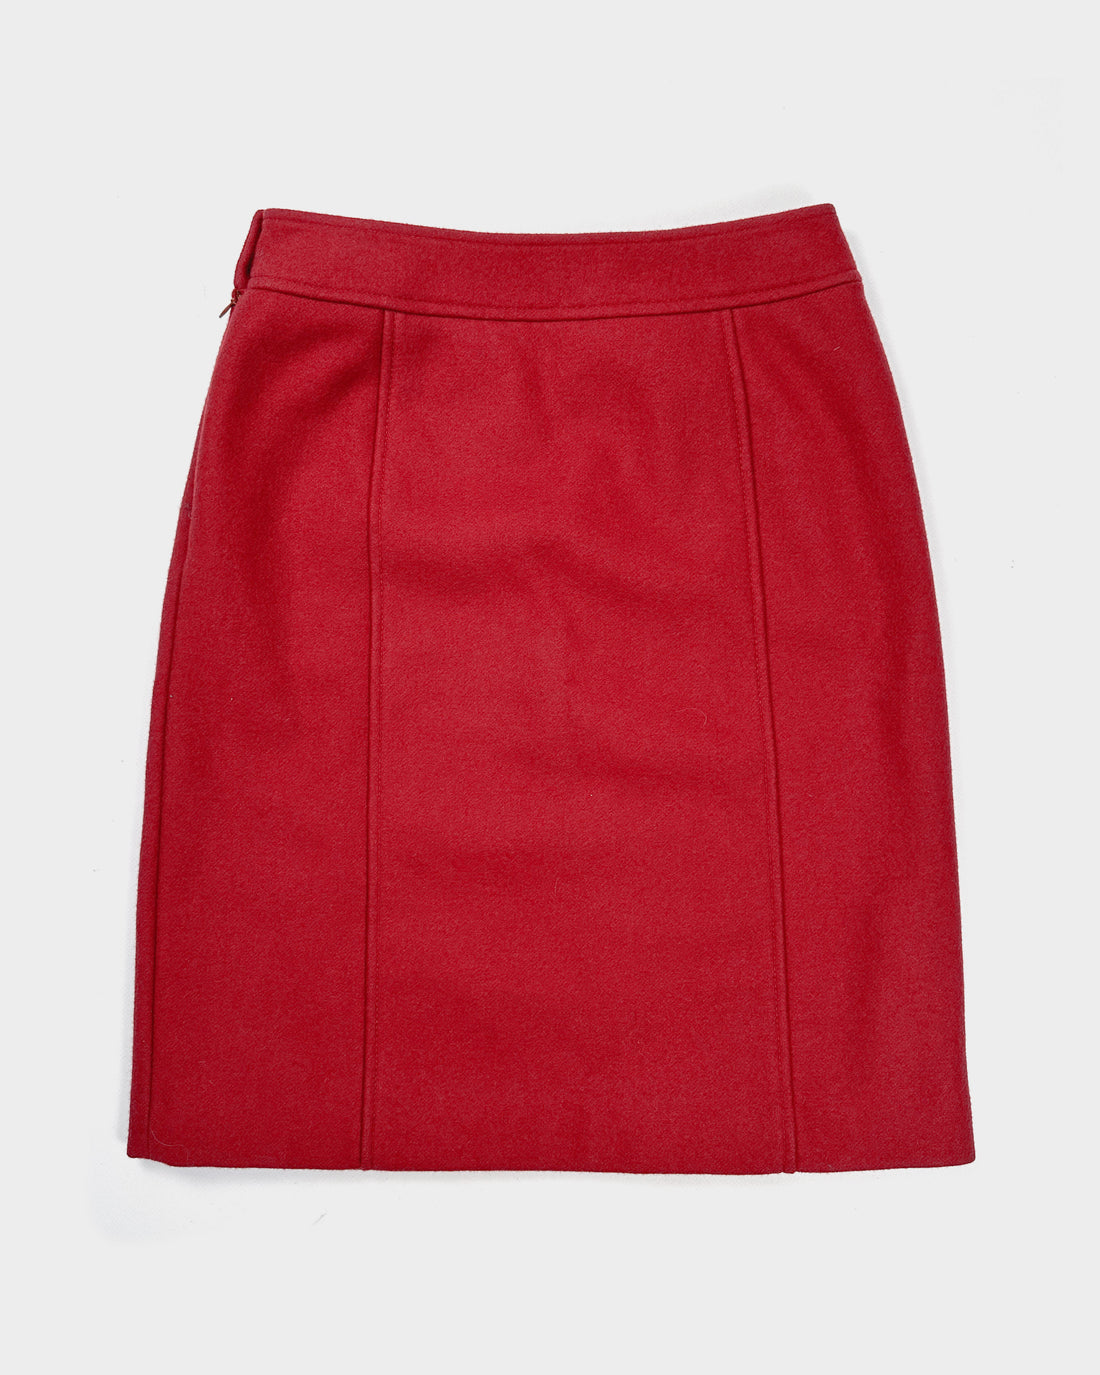 Miu Miu Wool Red Wool Skirt 2000's